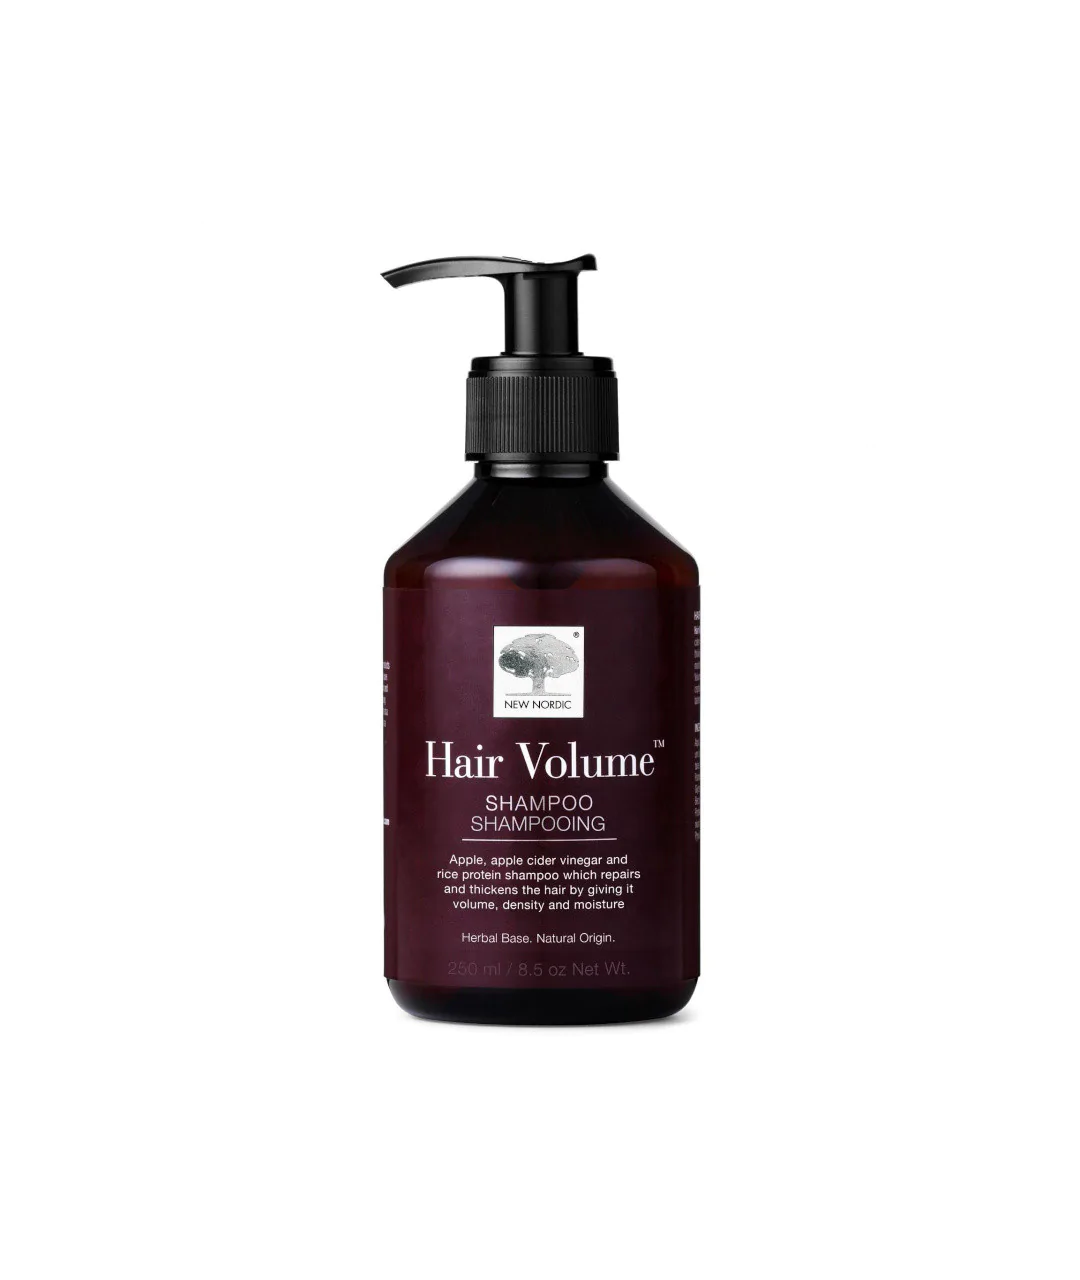 hair volume szampon